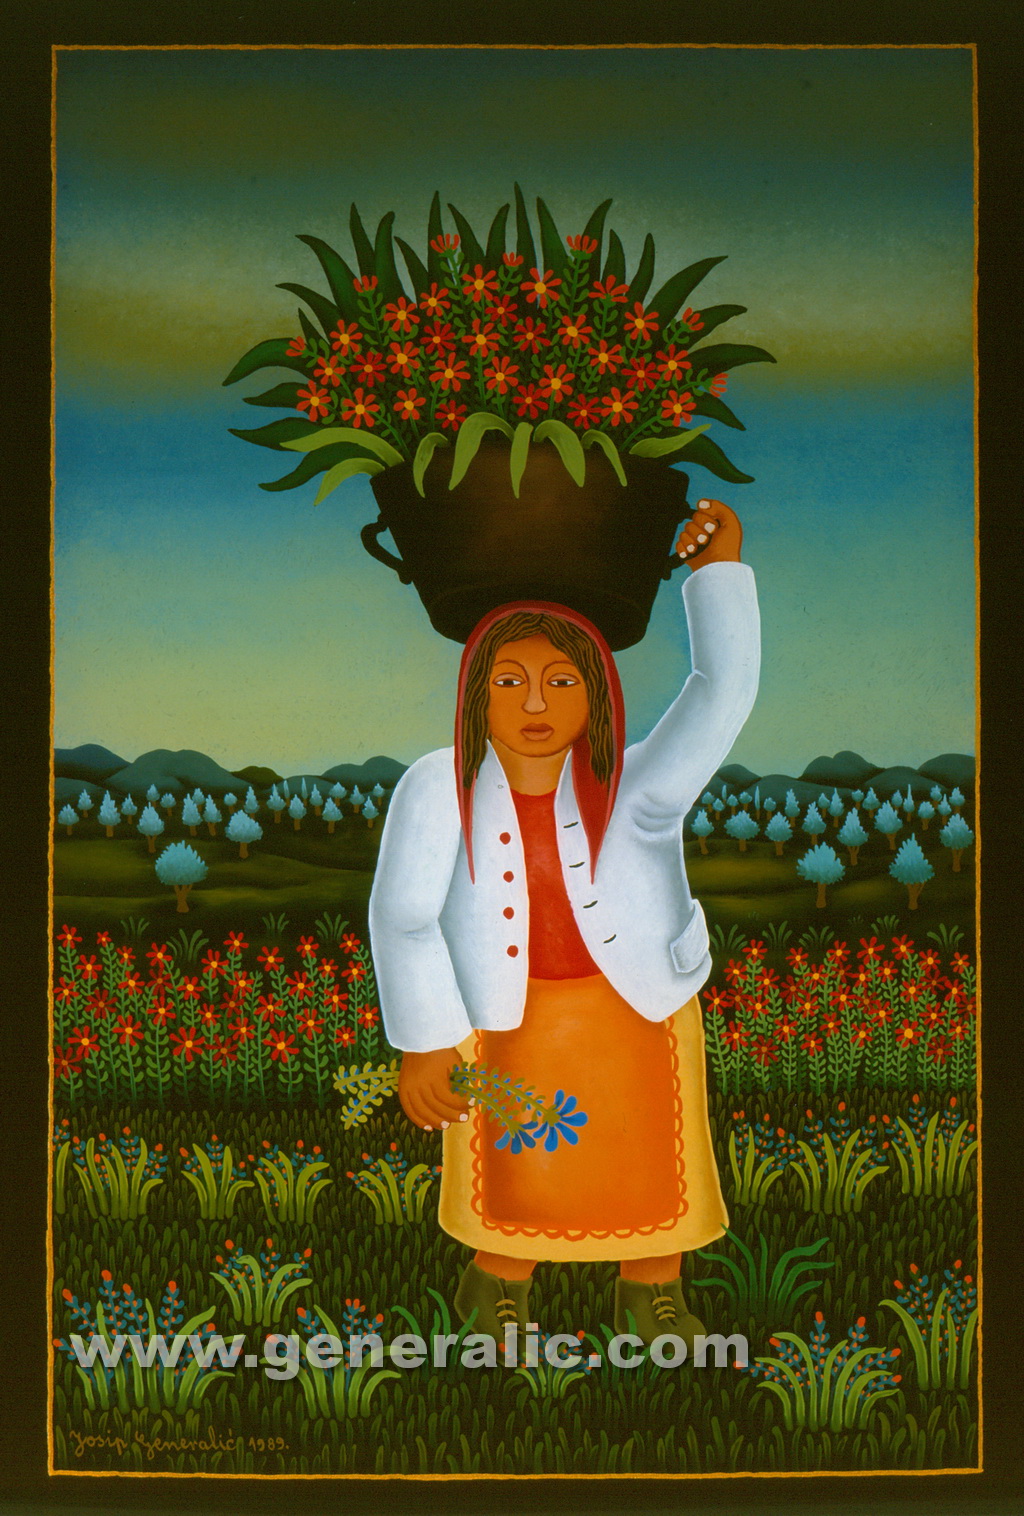 Josip Generalic, 1989, Woman with flowers, oil on glass